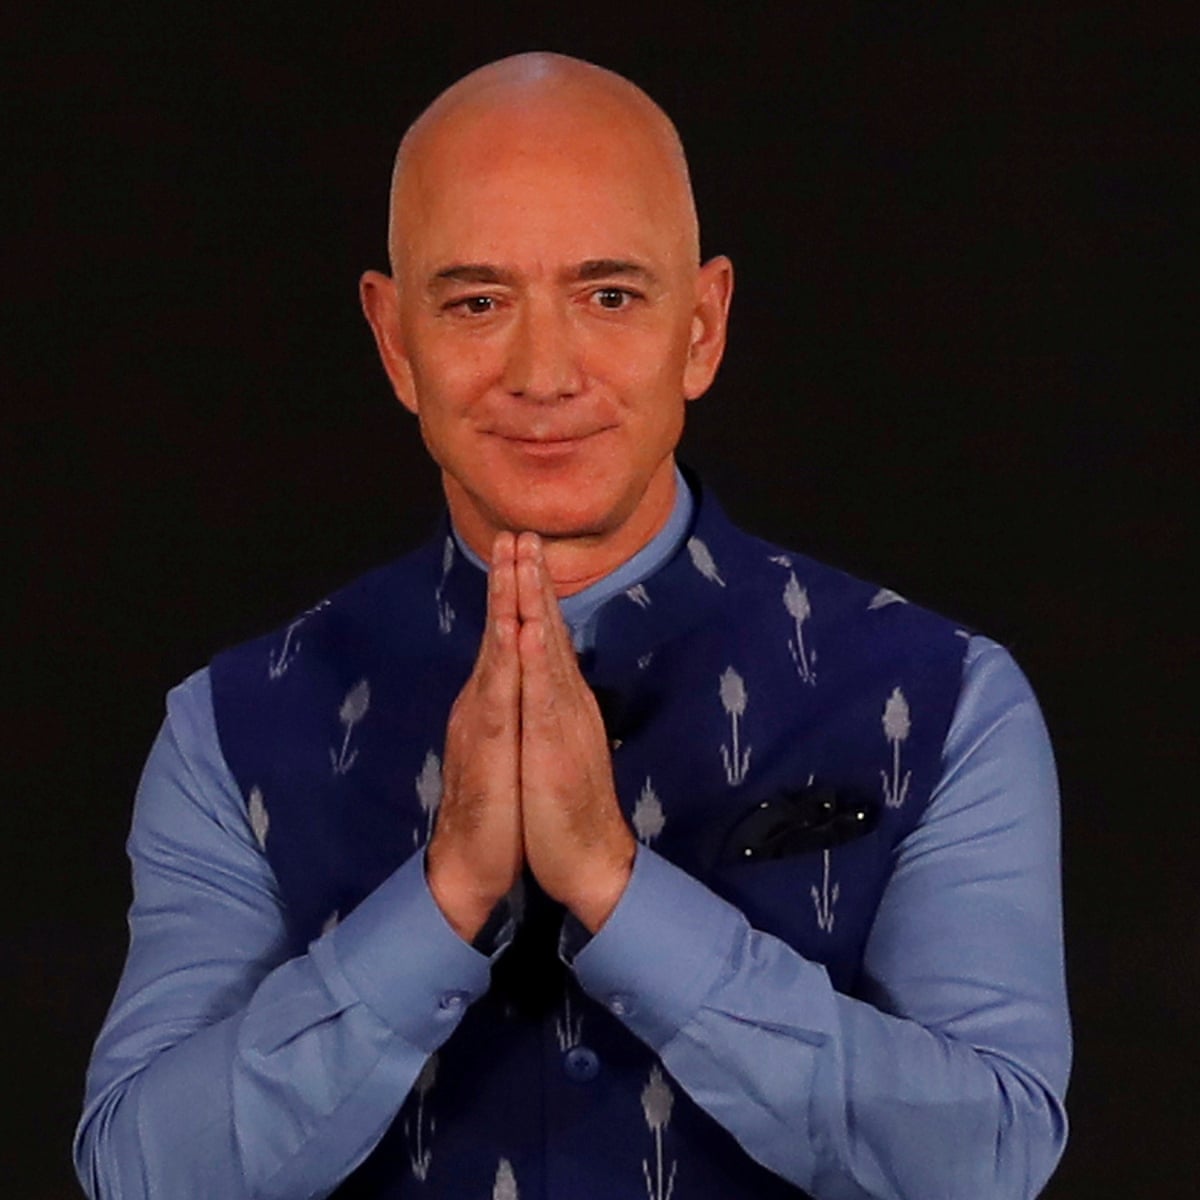 Images Of Jeff Bezos